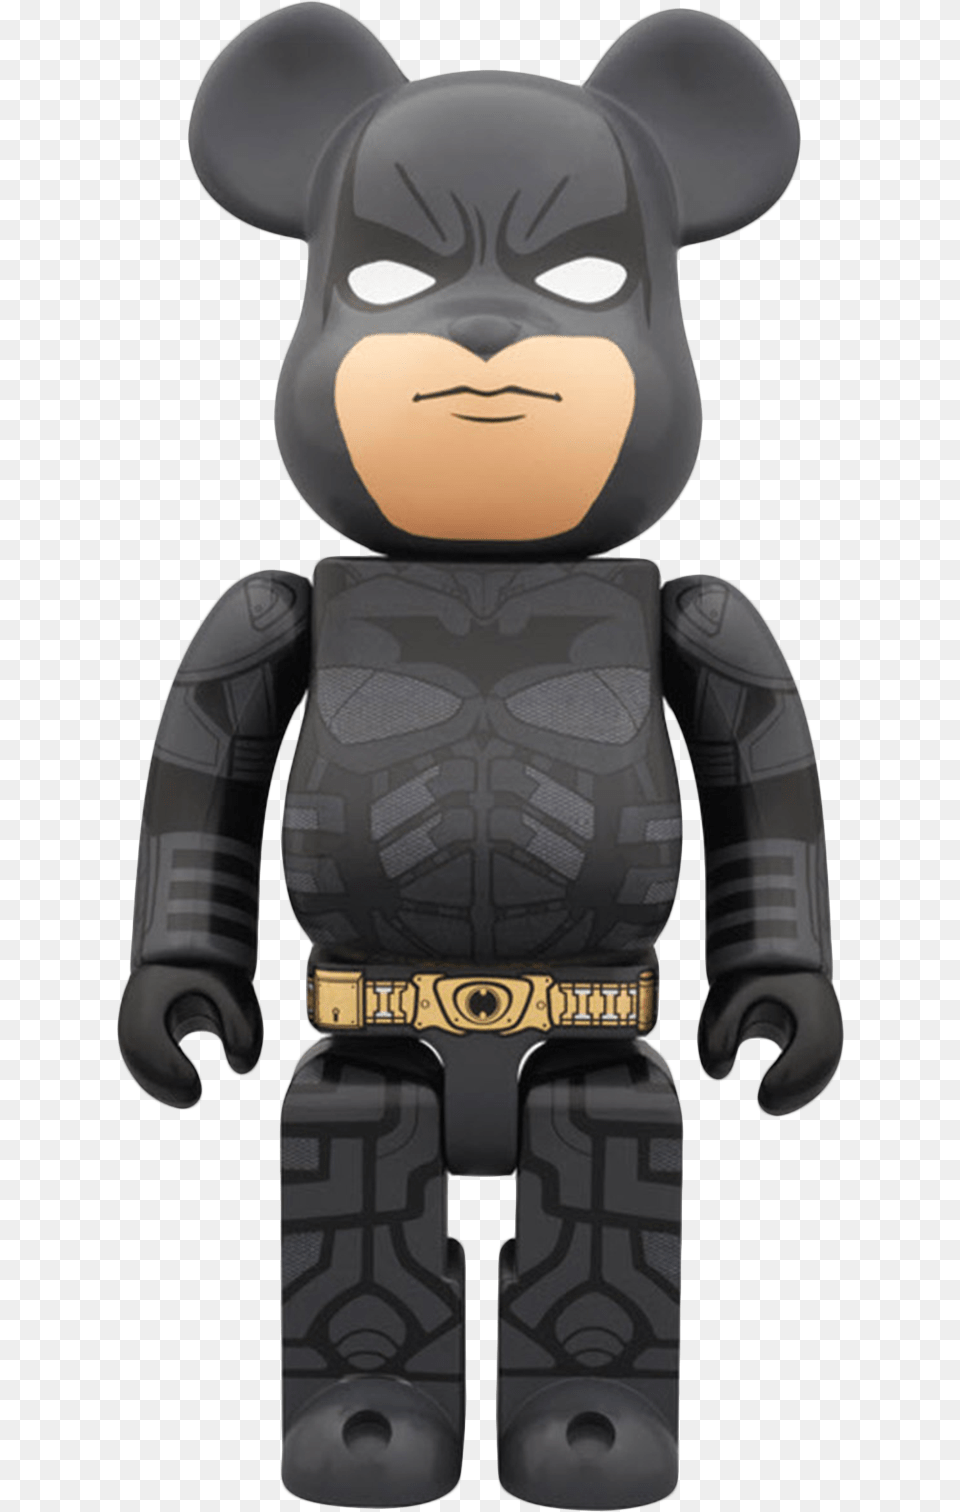 Berbrick 400 The Dark Knight Batman Batman The Dark Knight Bearbrick, Baby, Person, Face, Head Png Image